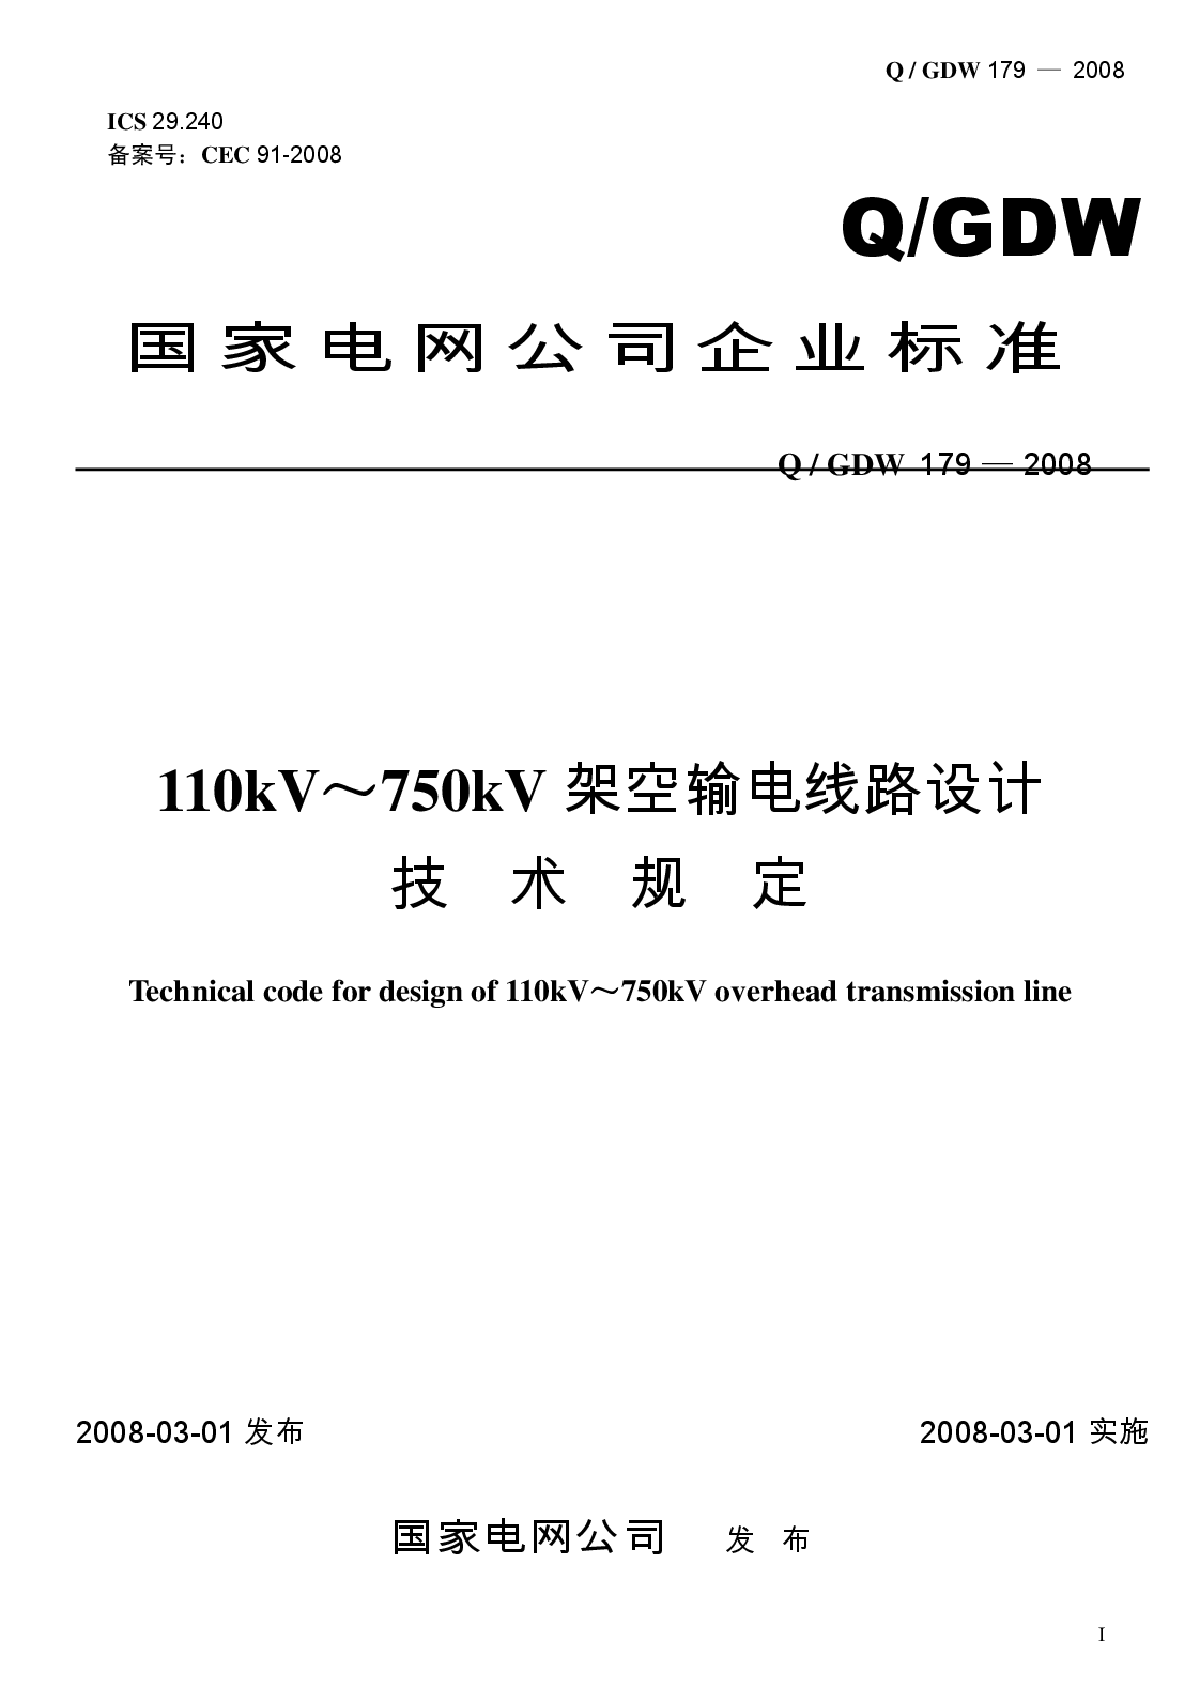 110kV～750kV架空输电线路设计技术规定